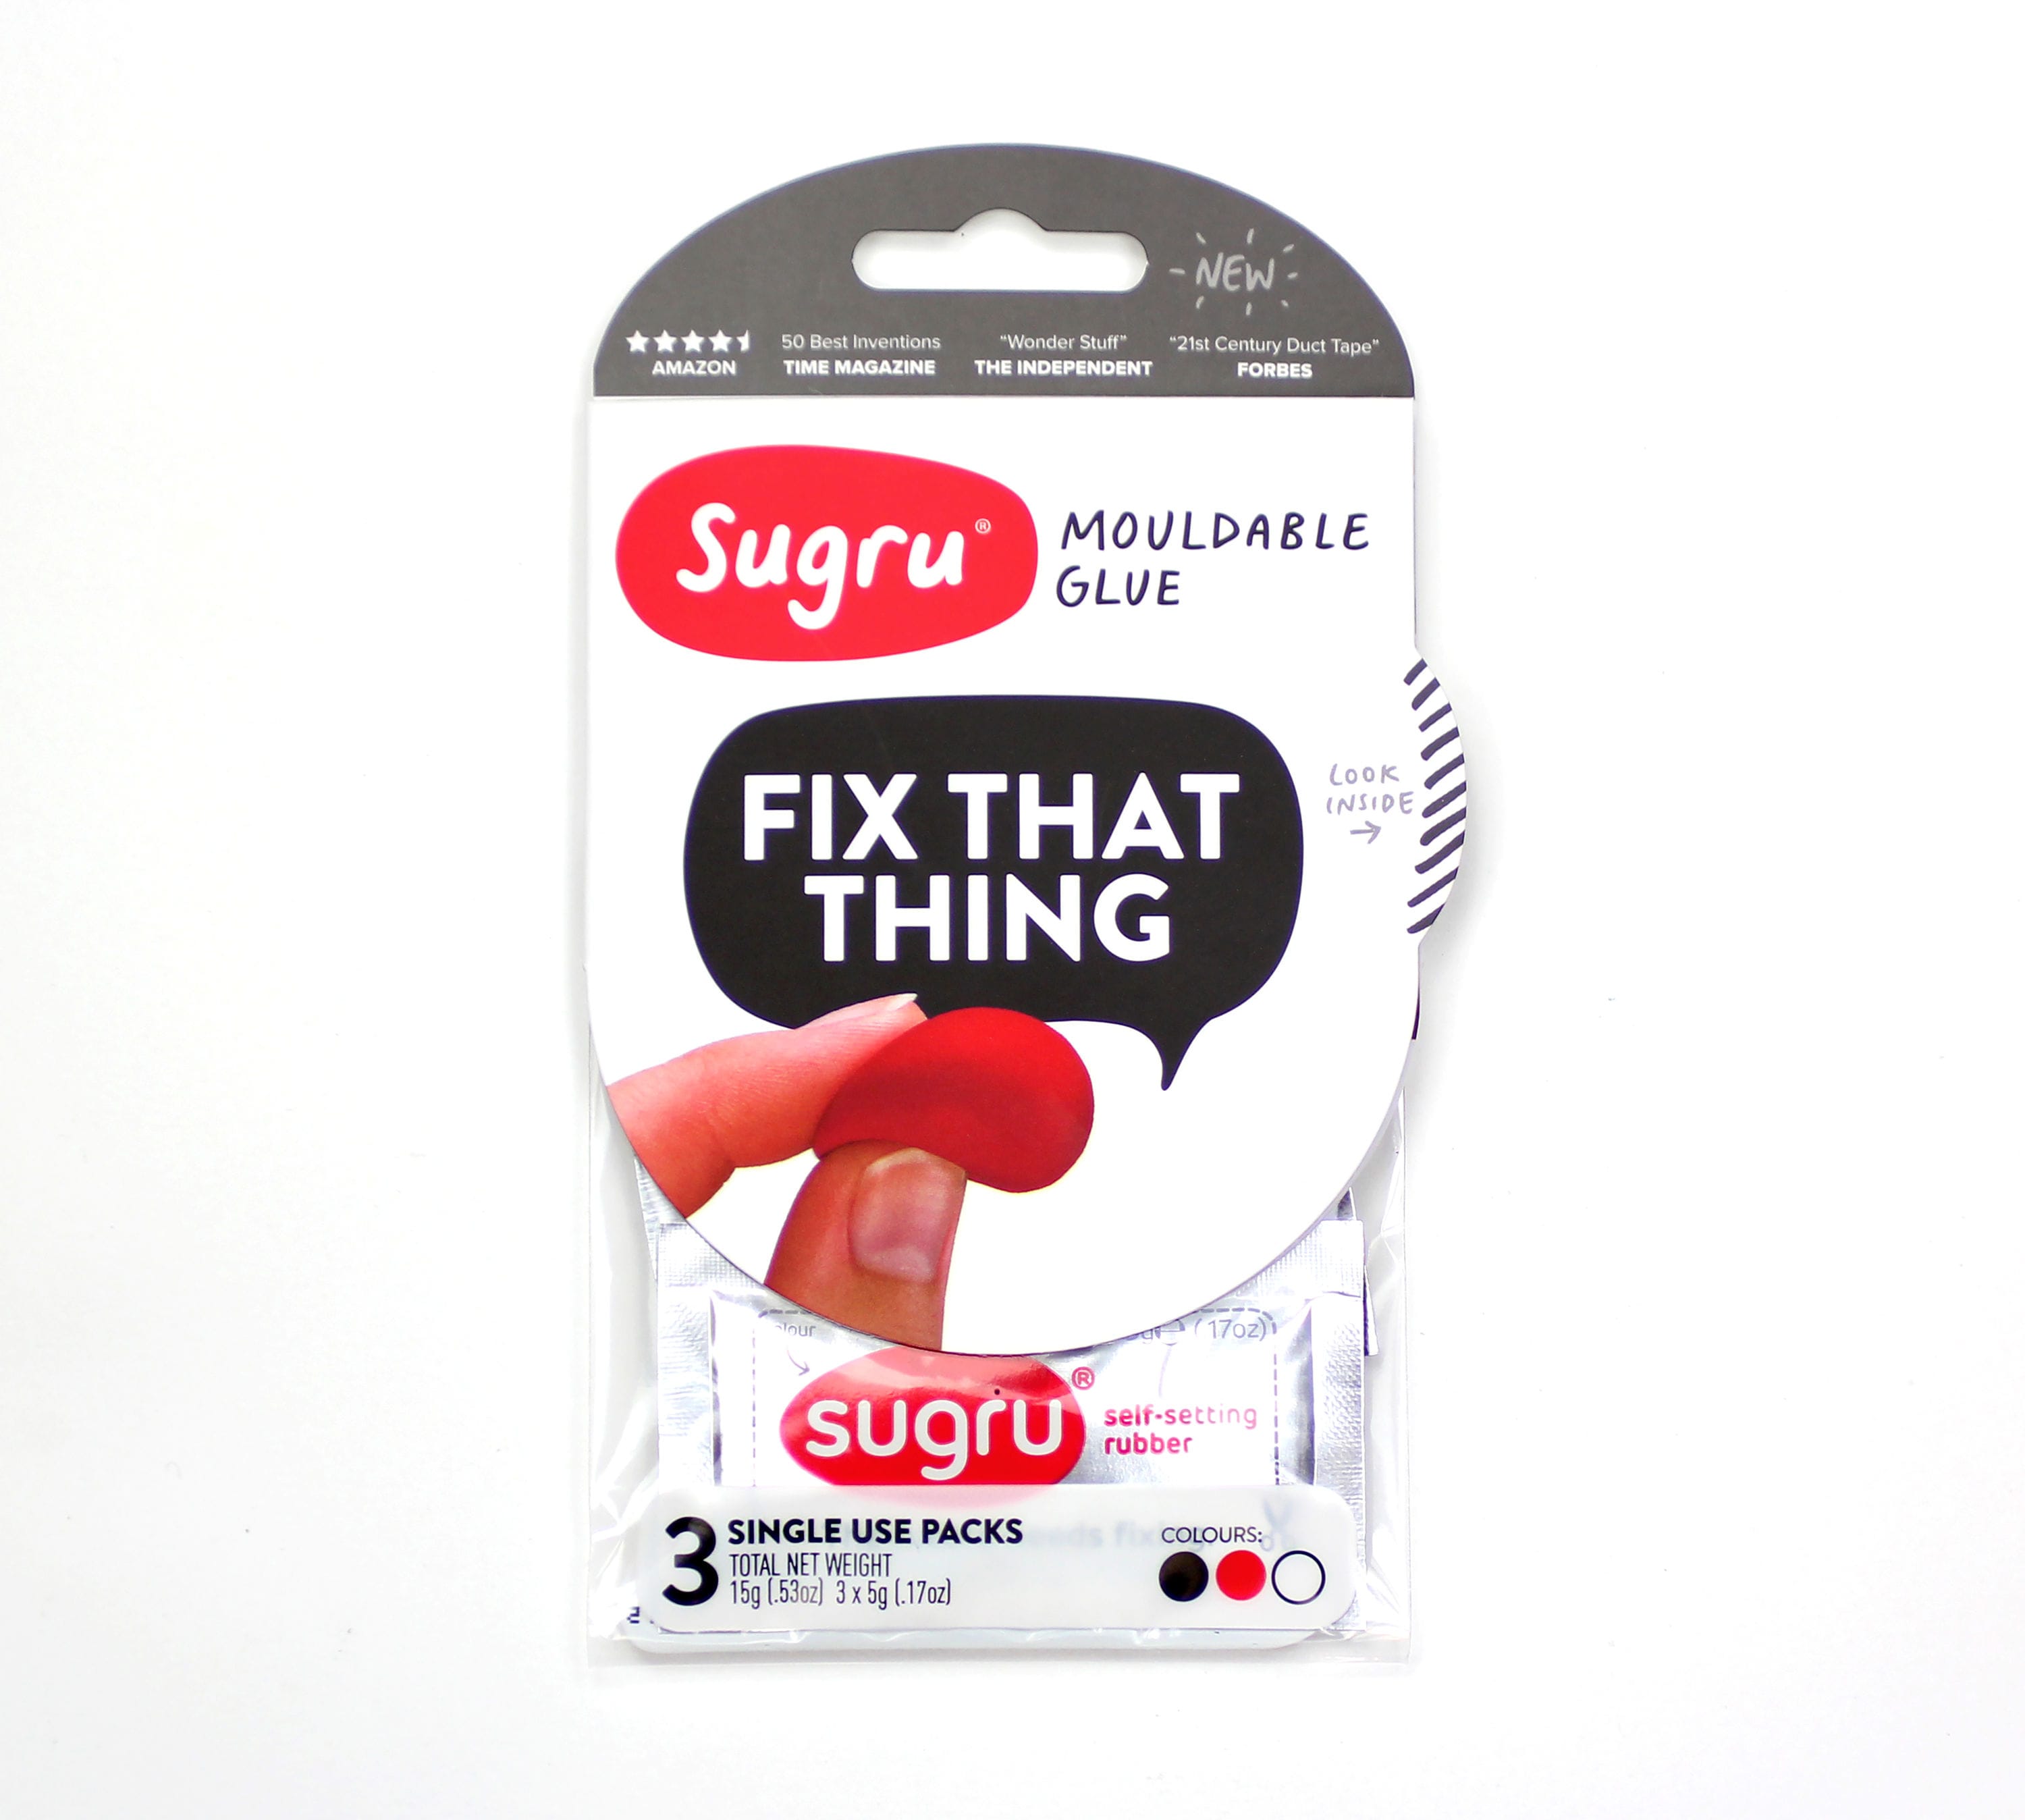 Sugru Moldable Glue - Original Formula - All-Purpose Adhesive